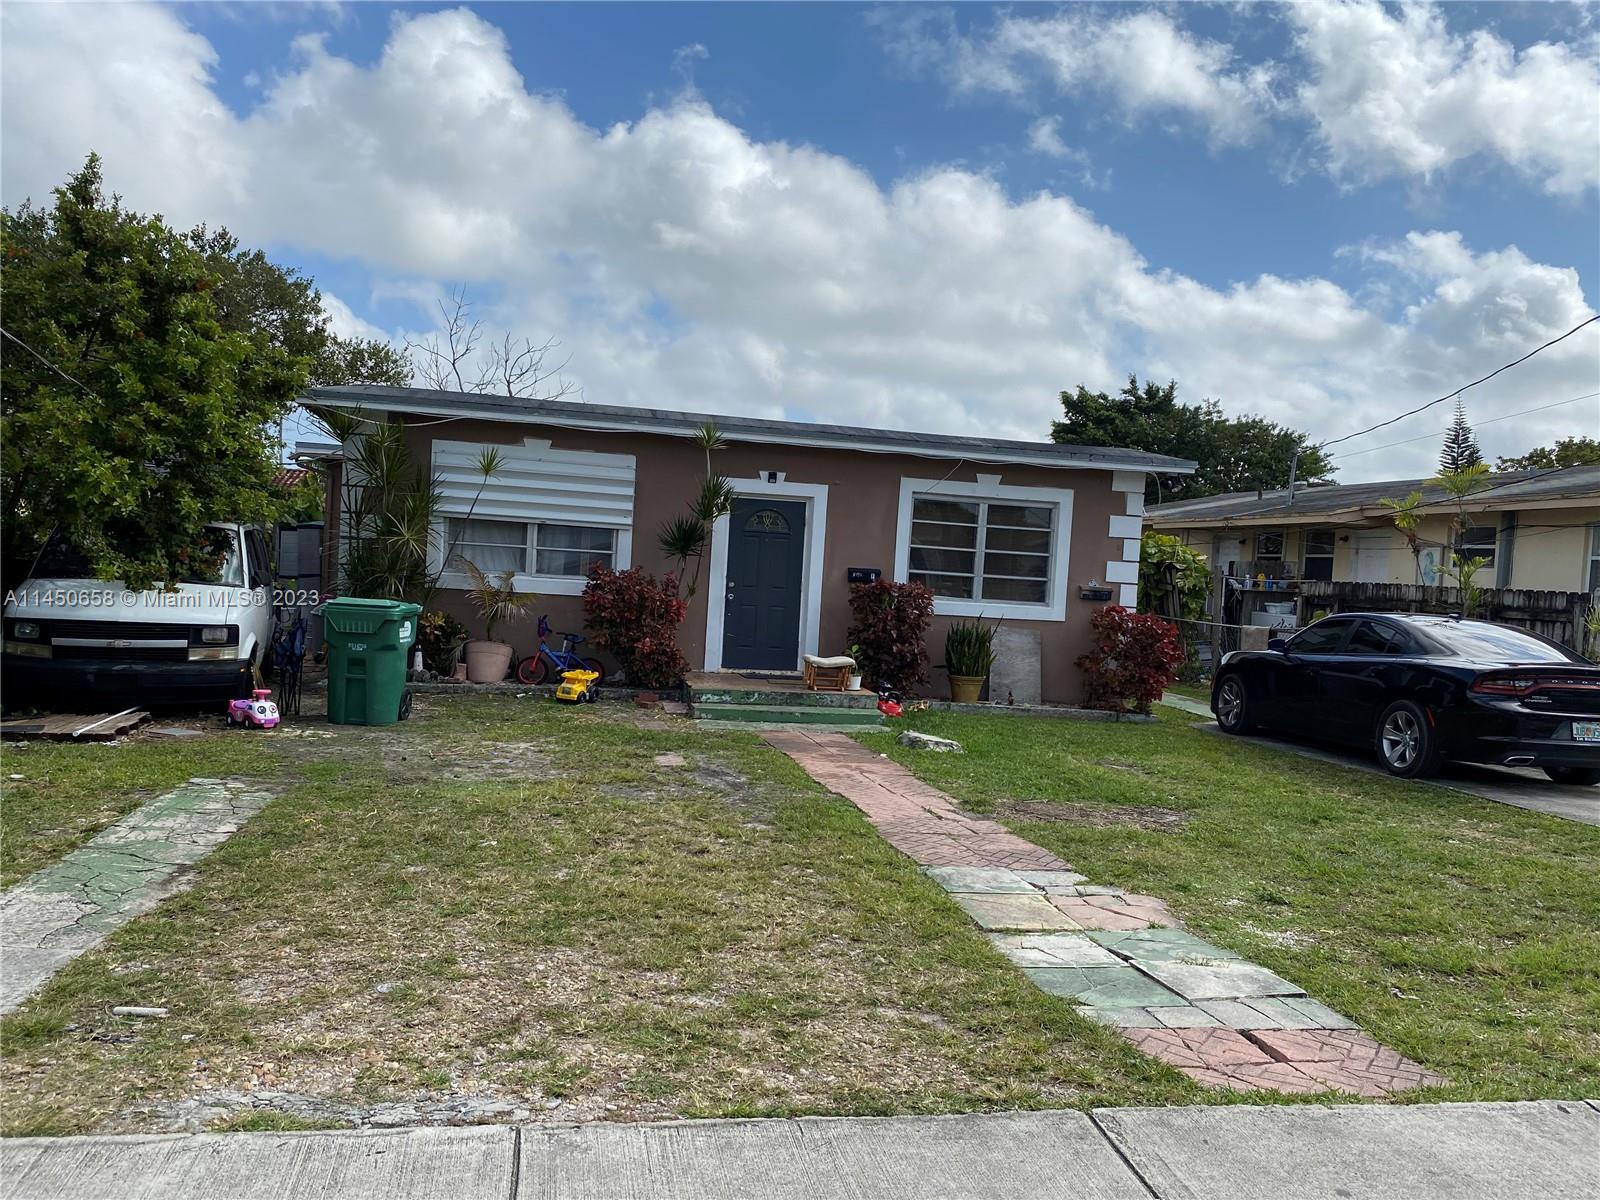 Rental Property at 3849 Sw 90th Ave, Miami, Broward County, Florida -  - $825,000 MO.